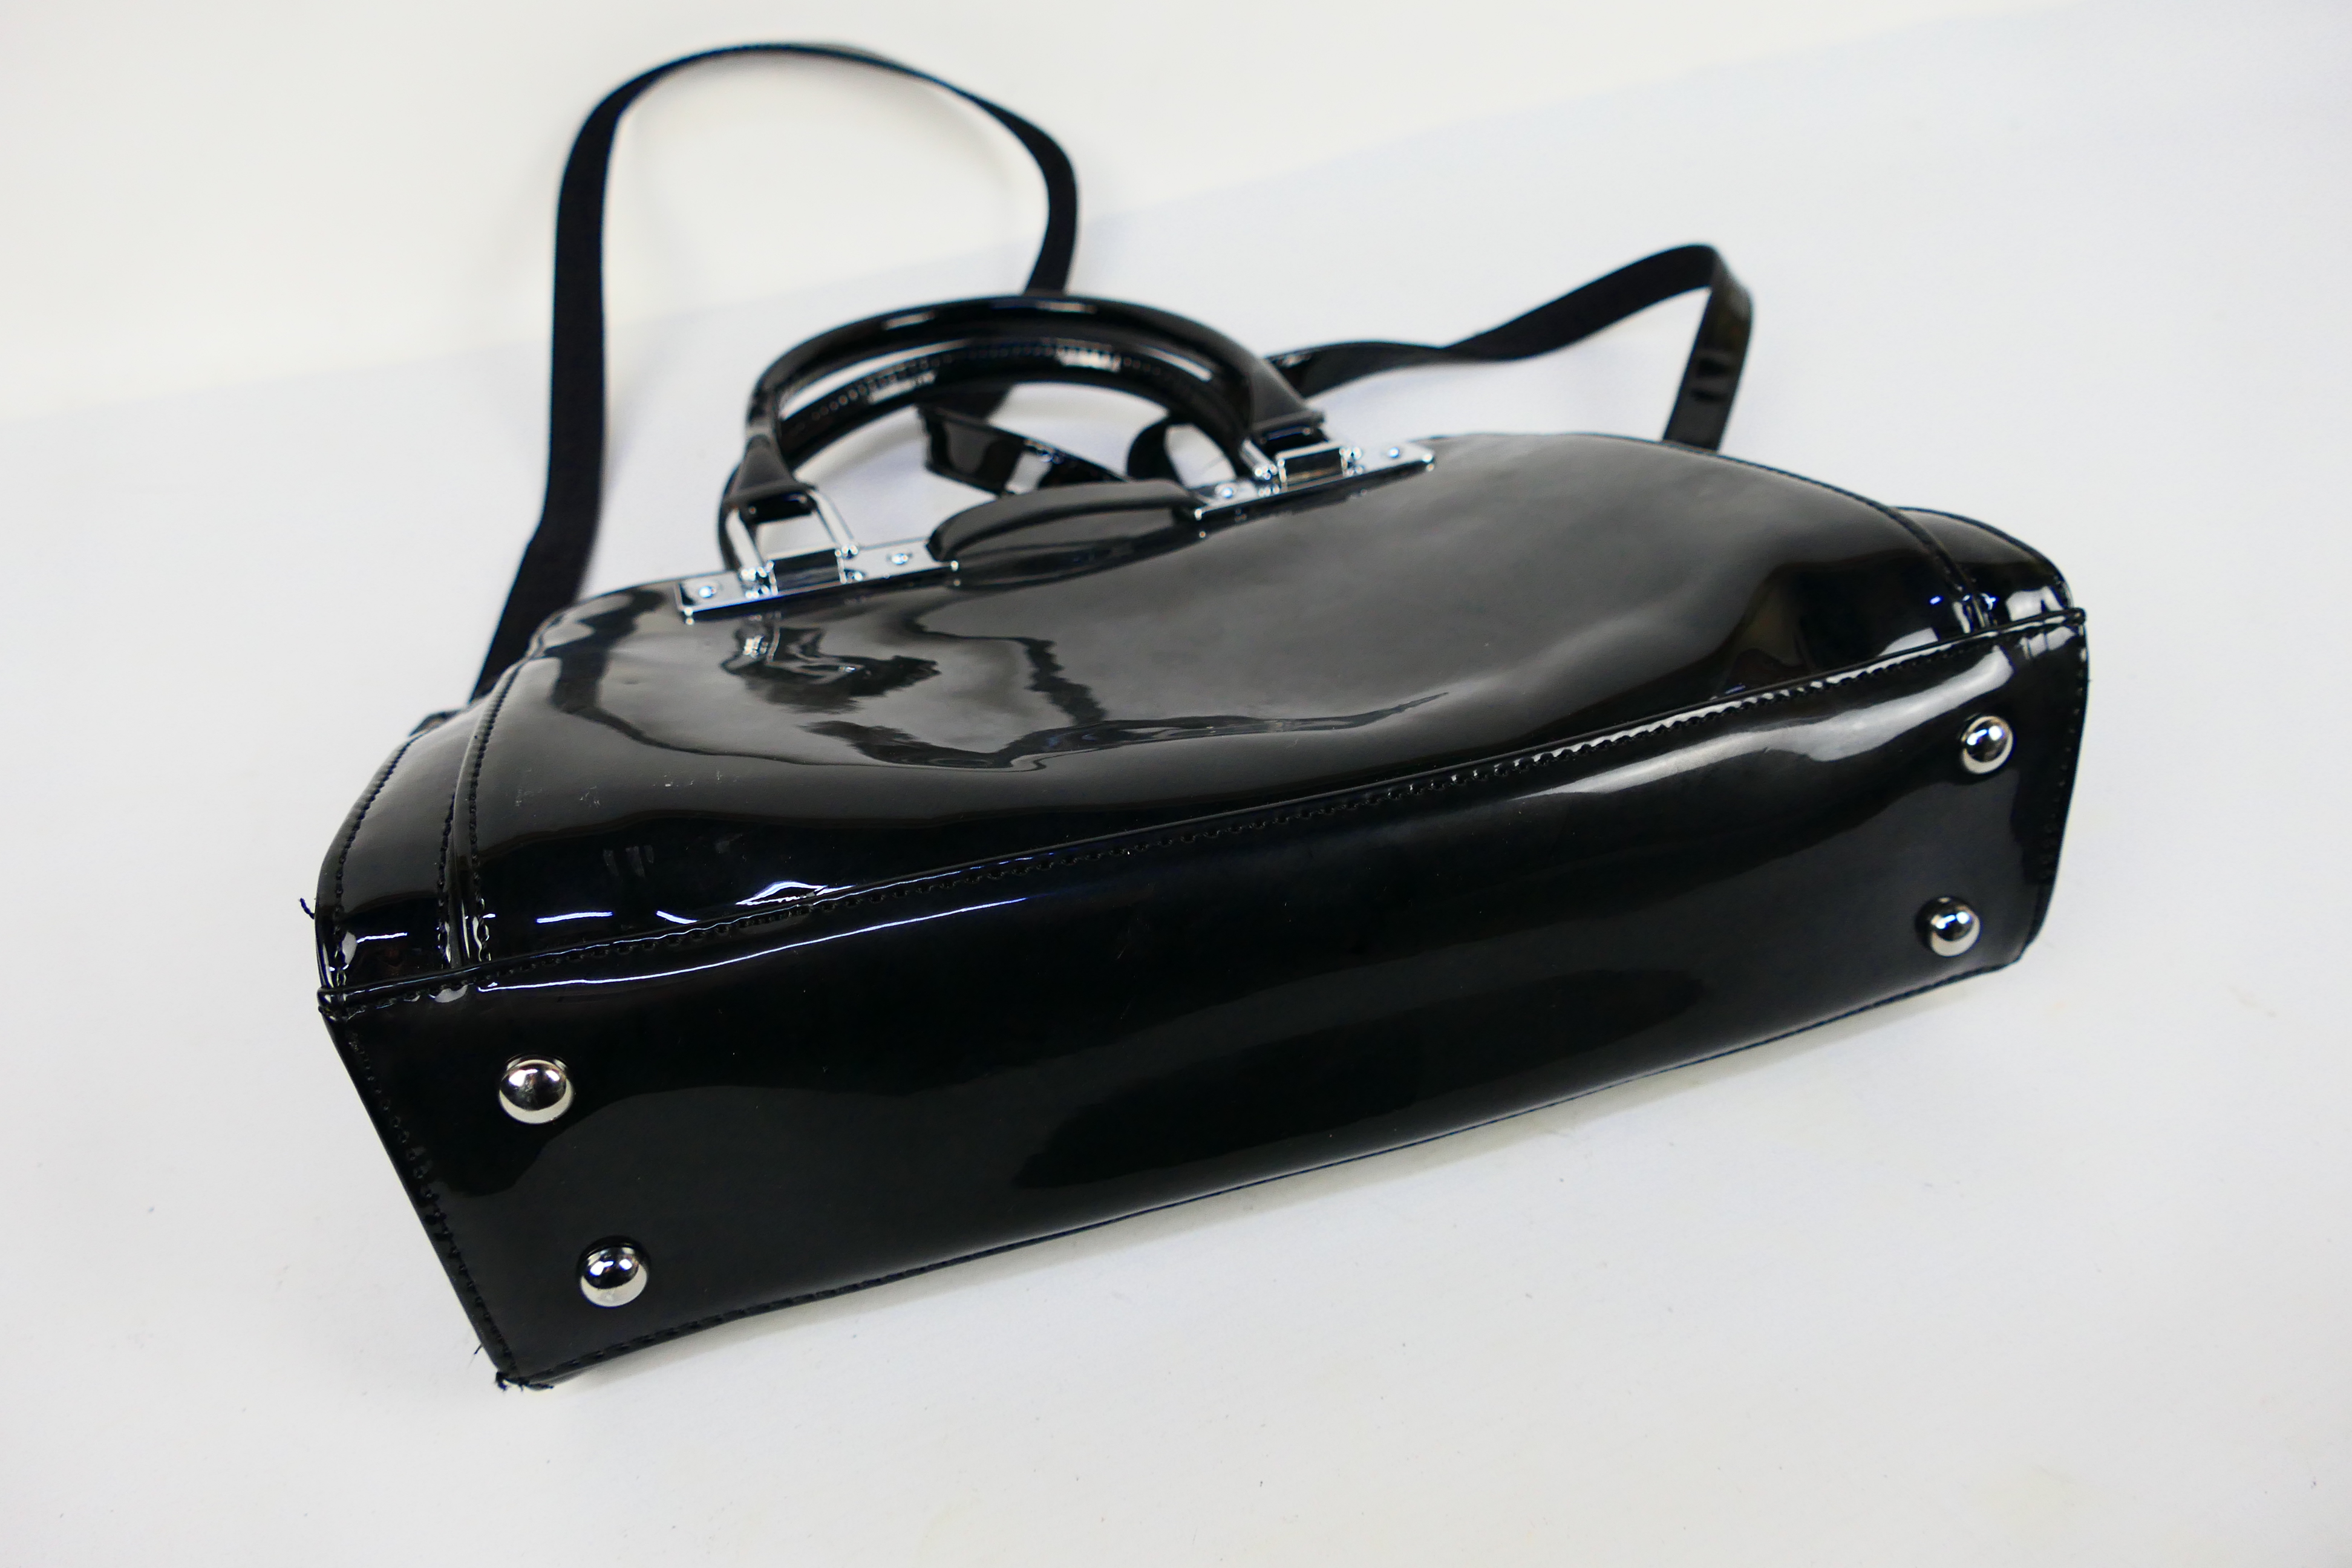 Superbia - A glossy black Superbia handbag with shoulder strap - Handbag has two inside zip pockets, - Image 3 of 4